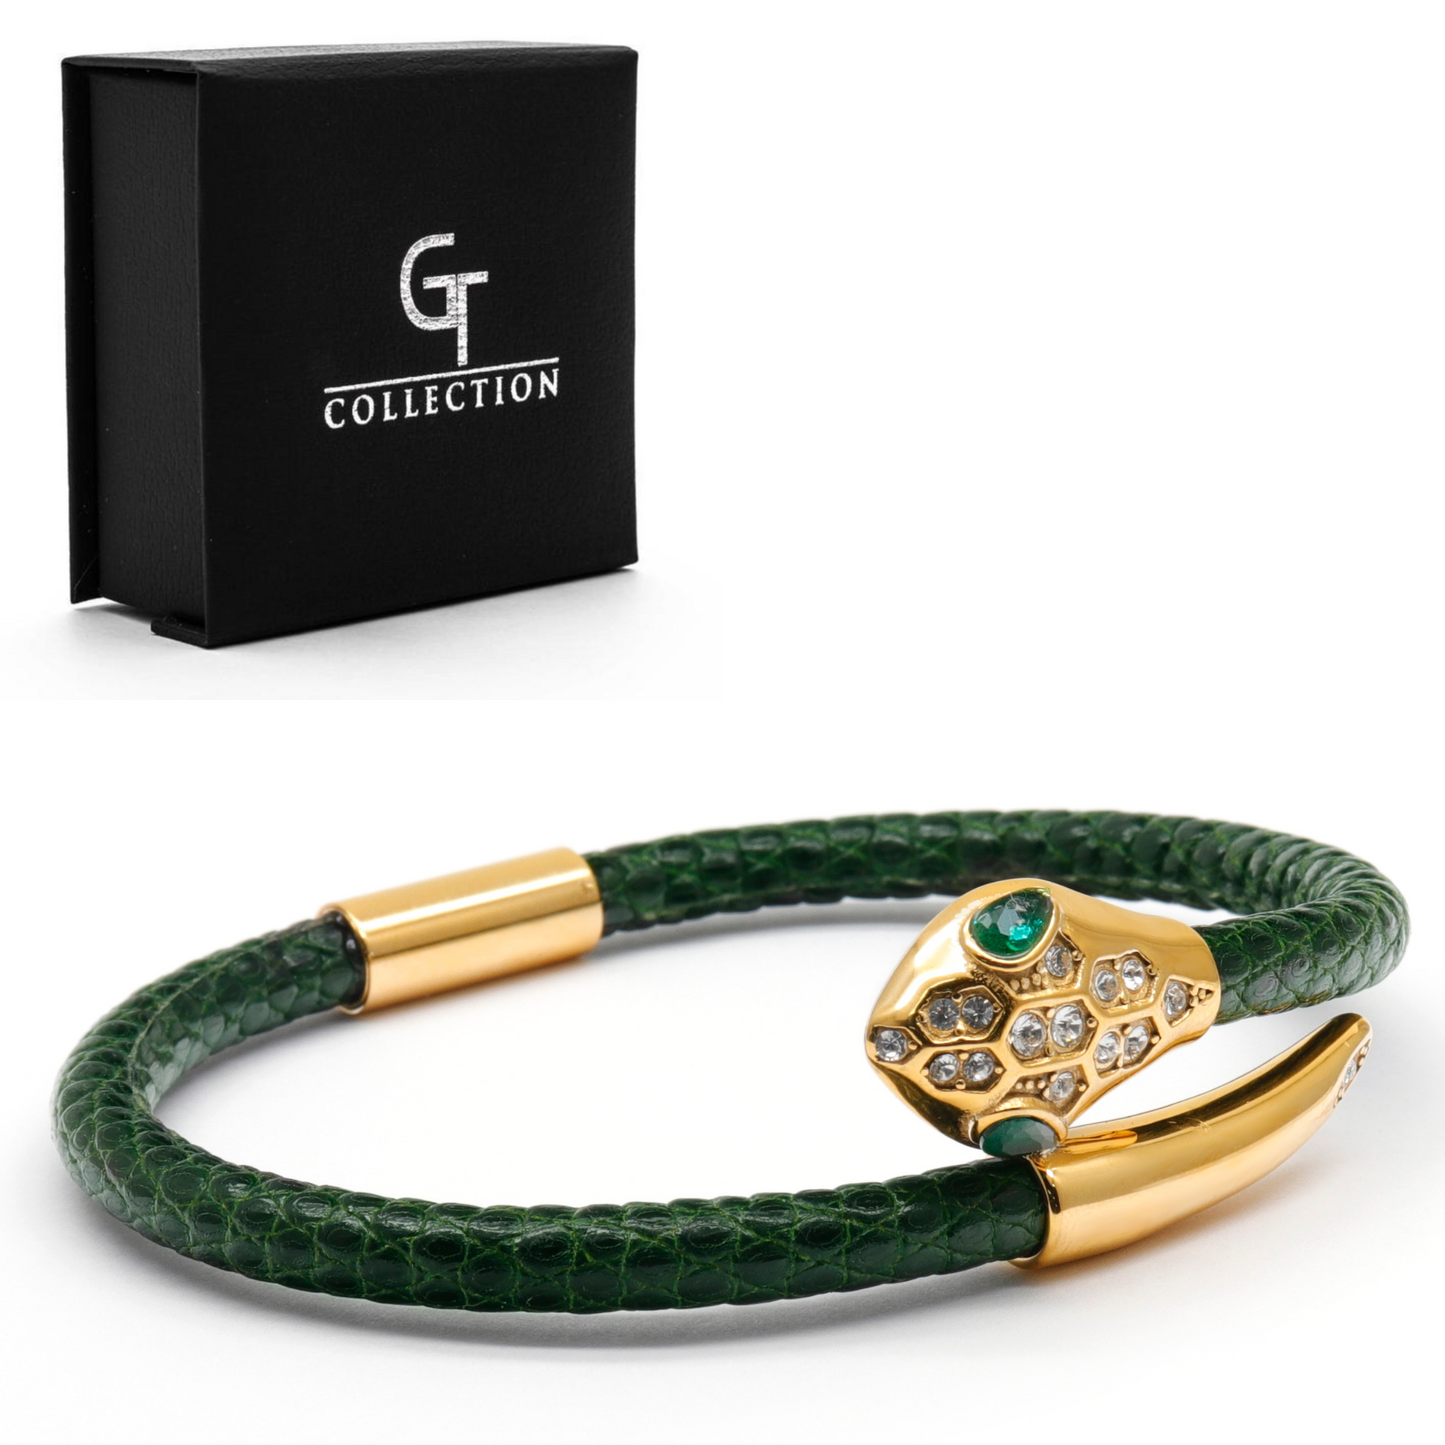 Snake Head Bracelet - Green Leather with Zircon Diamond